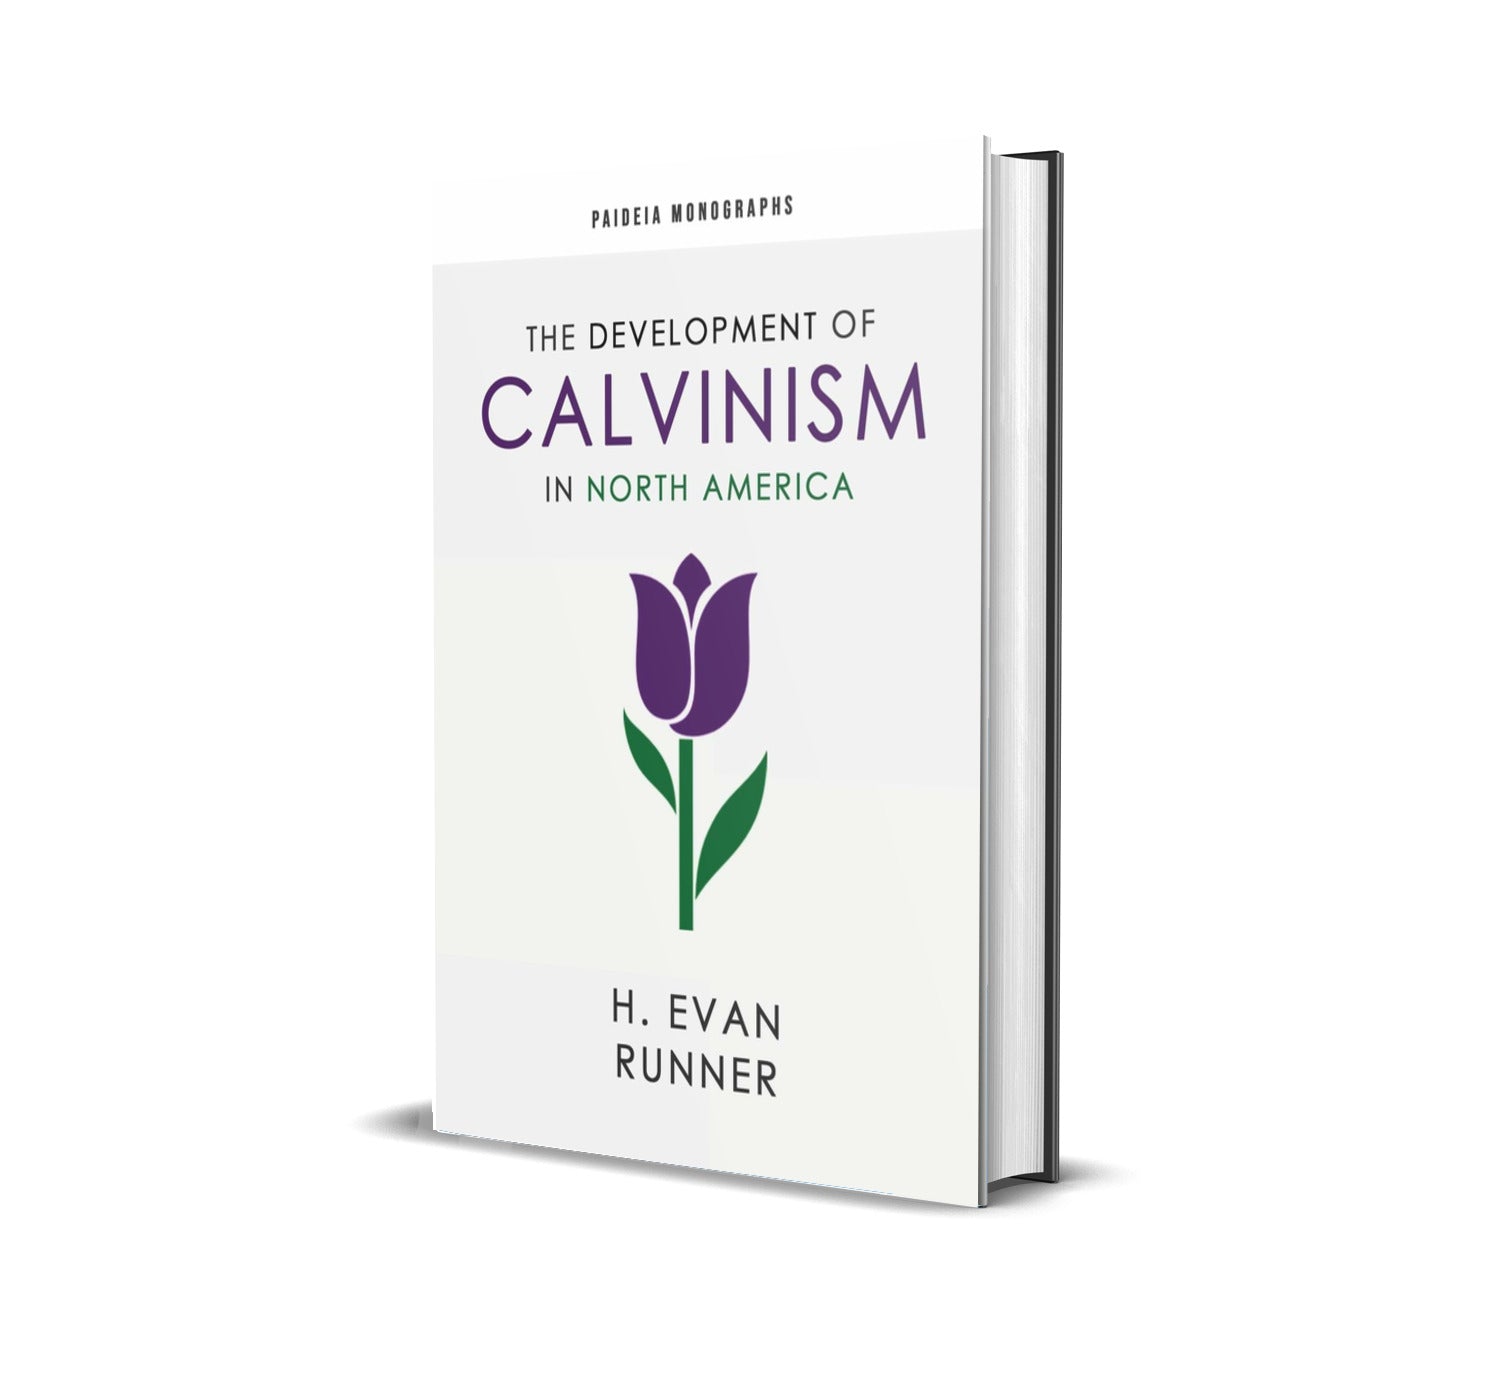 The Development of Calvinism in North America (Paideia Monographs)